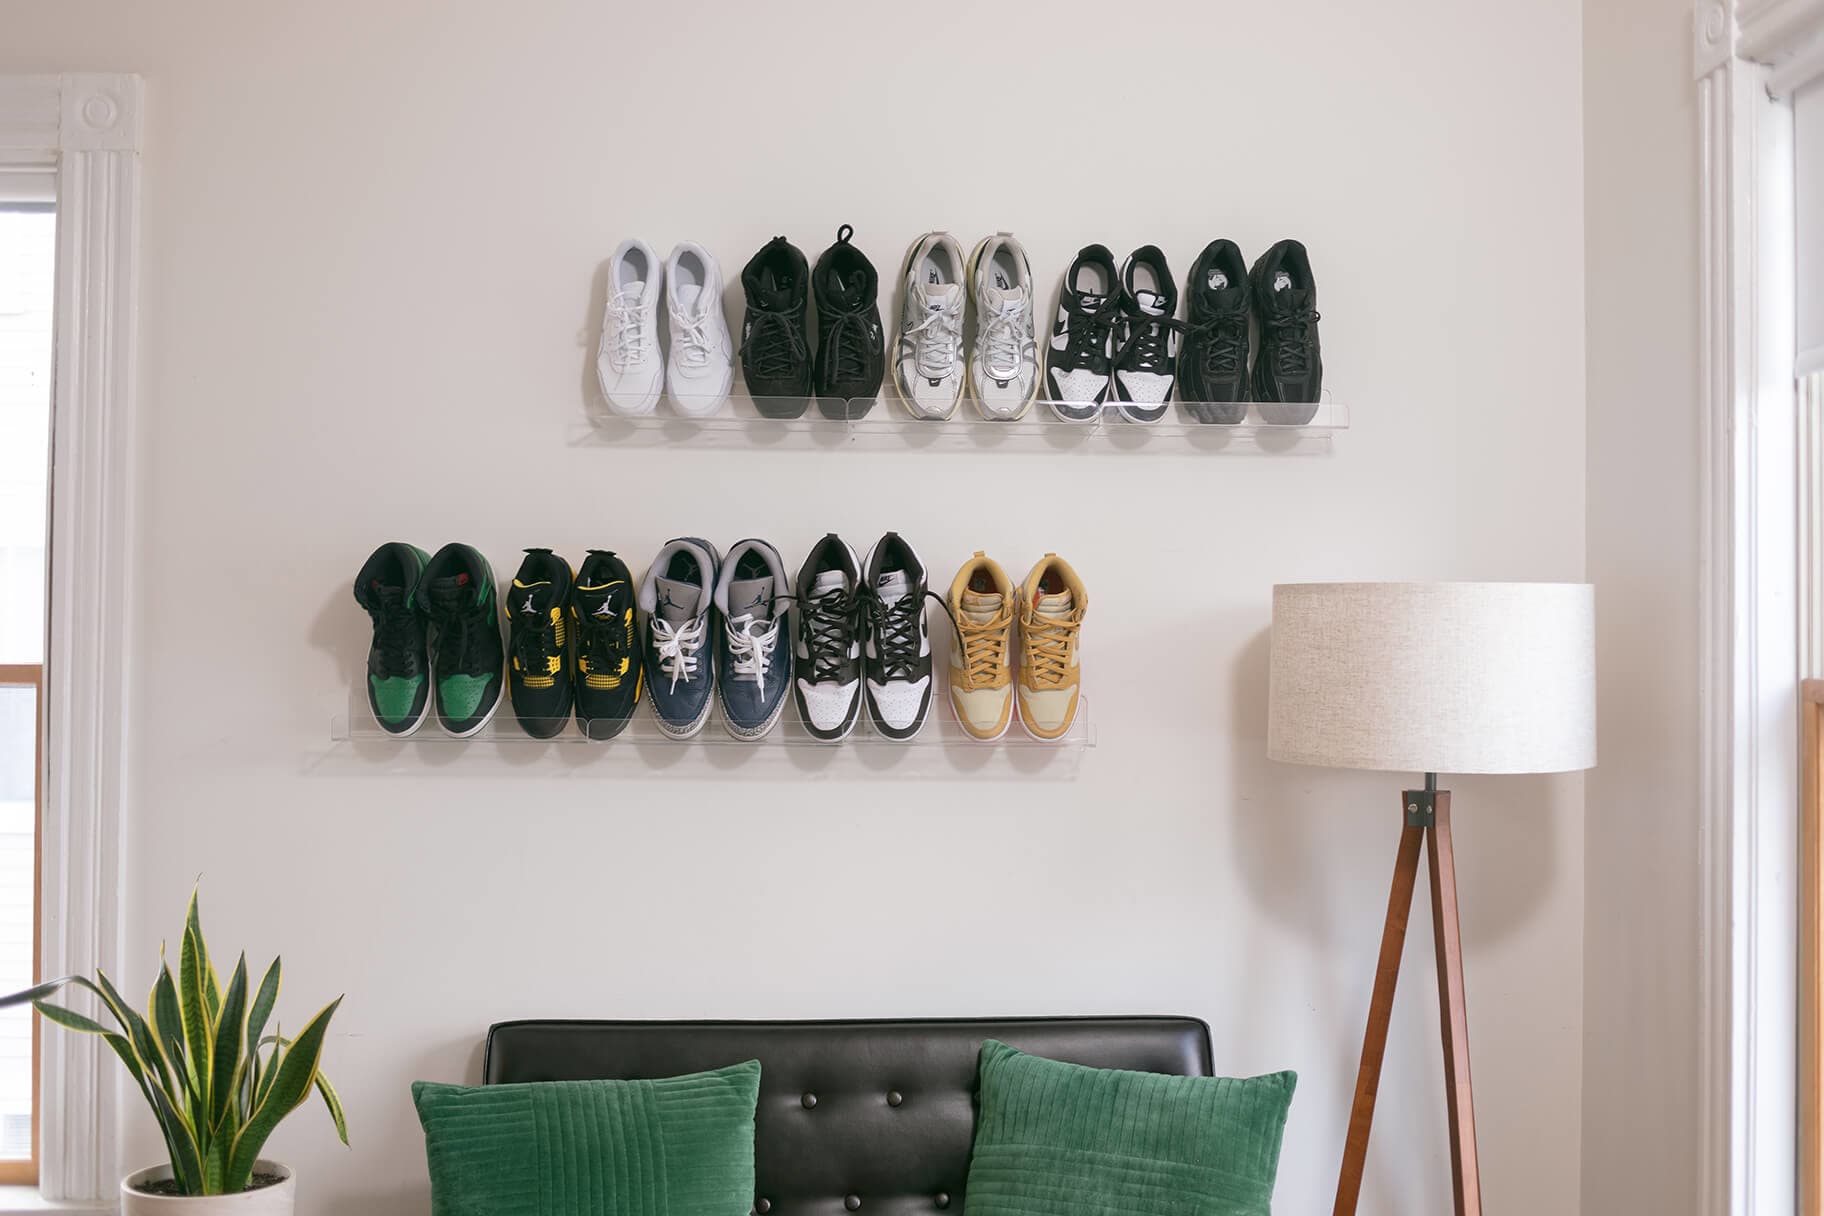 Minimalist wall-mounted shoe rack helps store footwear while